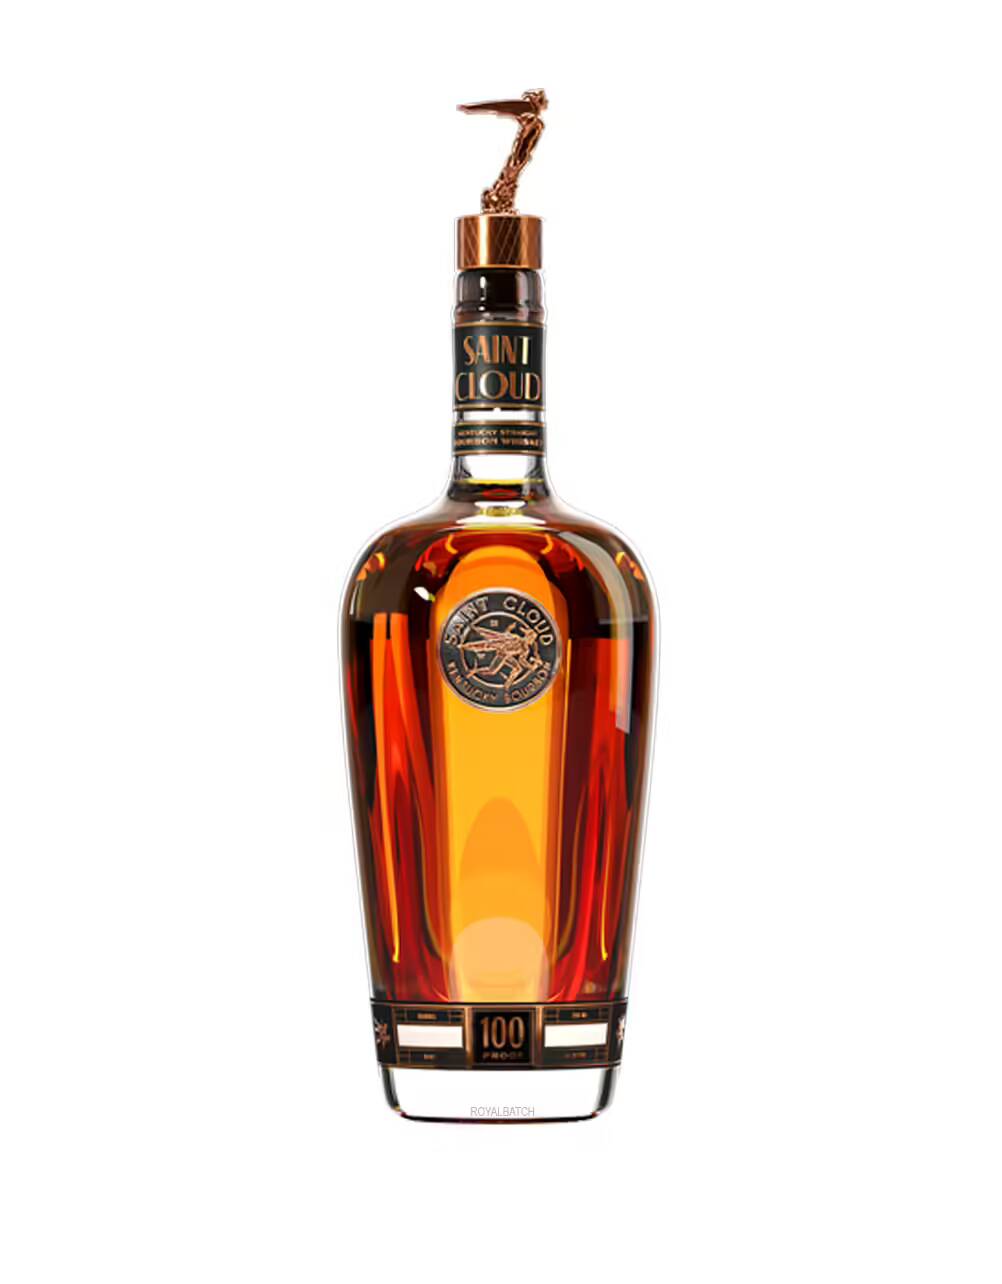 Saint Cloud 100 Proof Kentucky Bourbon Whiskey